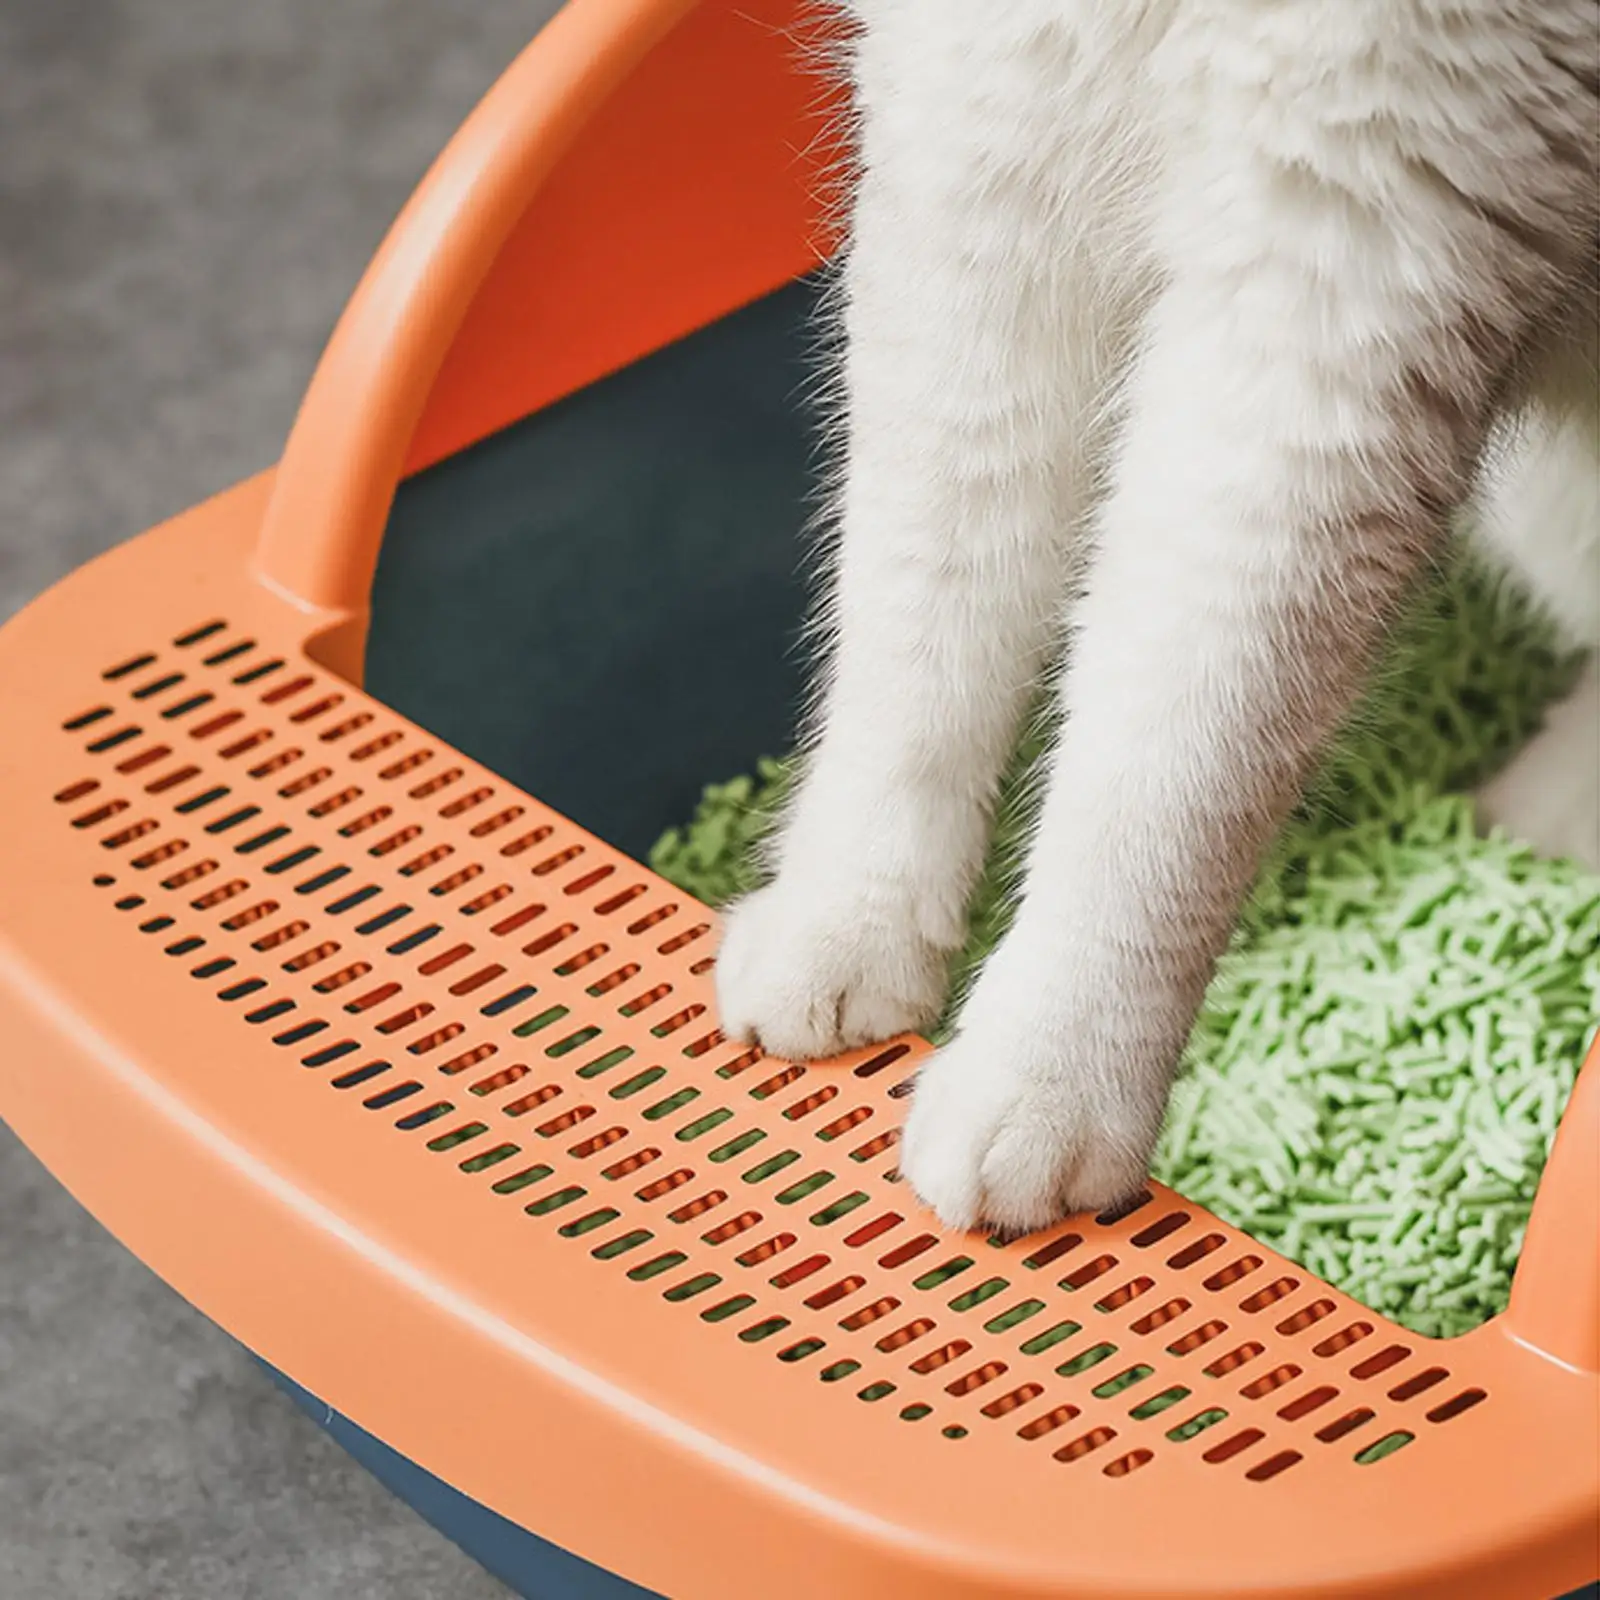 Pet Toilet Pan Cat Litter Box for Sand Box Supplies Small Animals Kitten